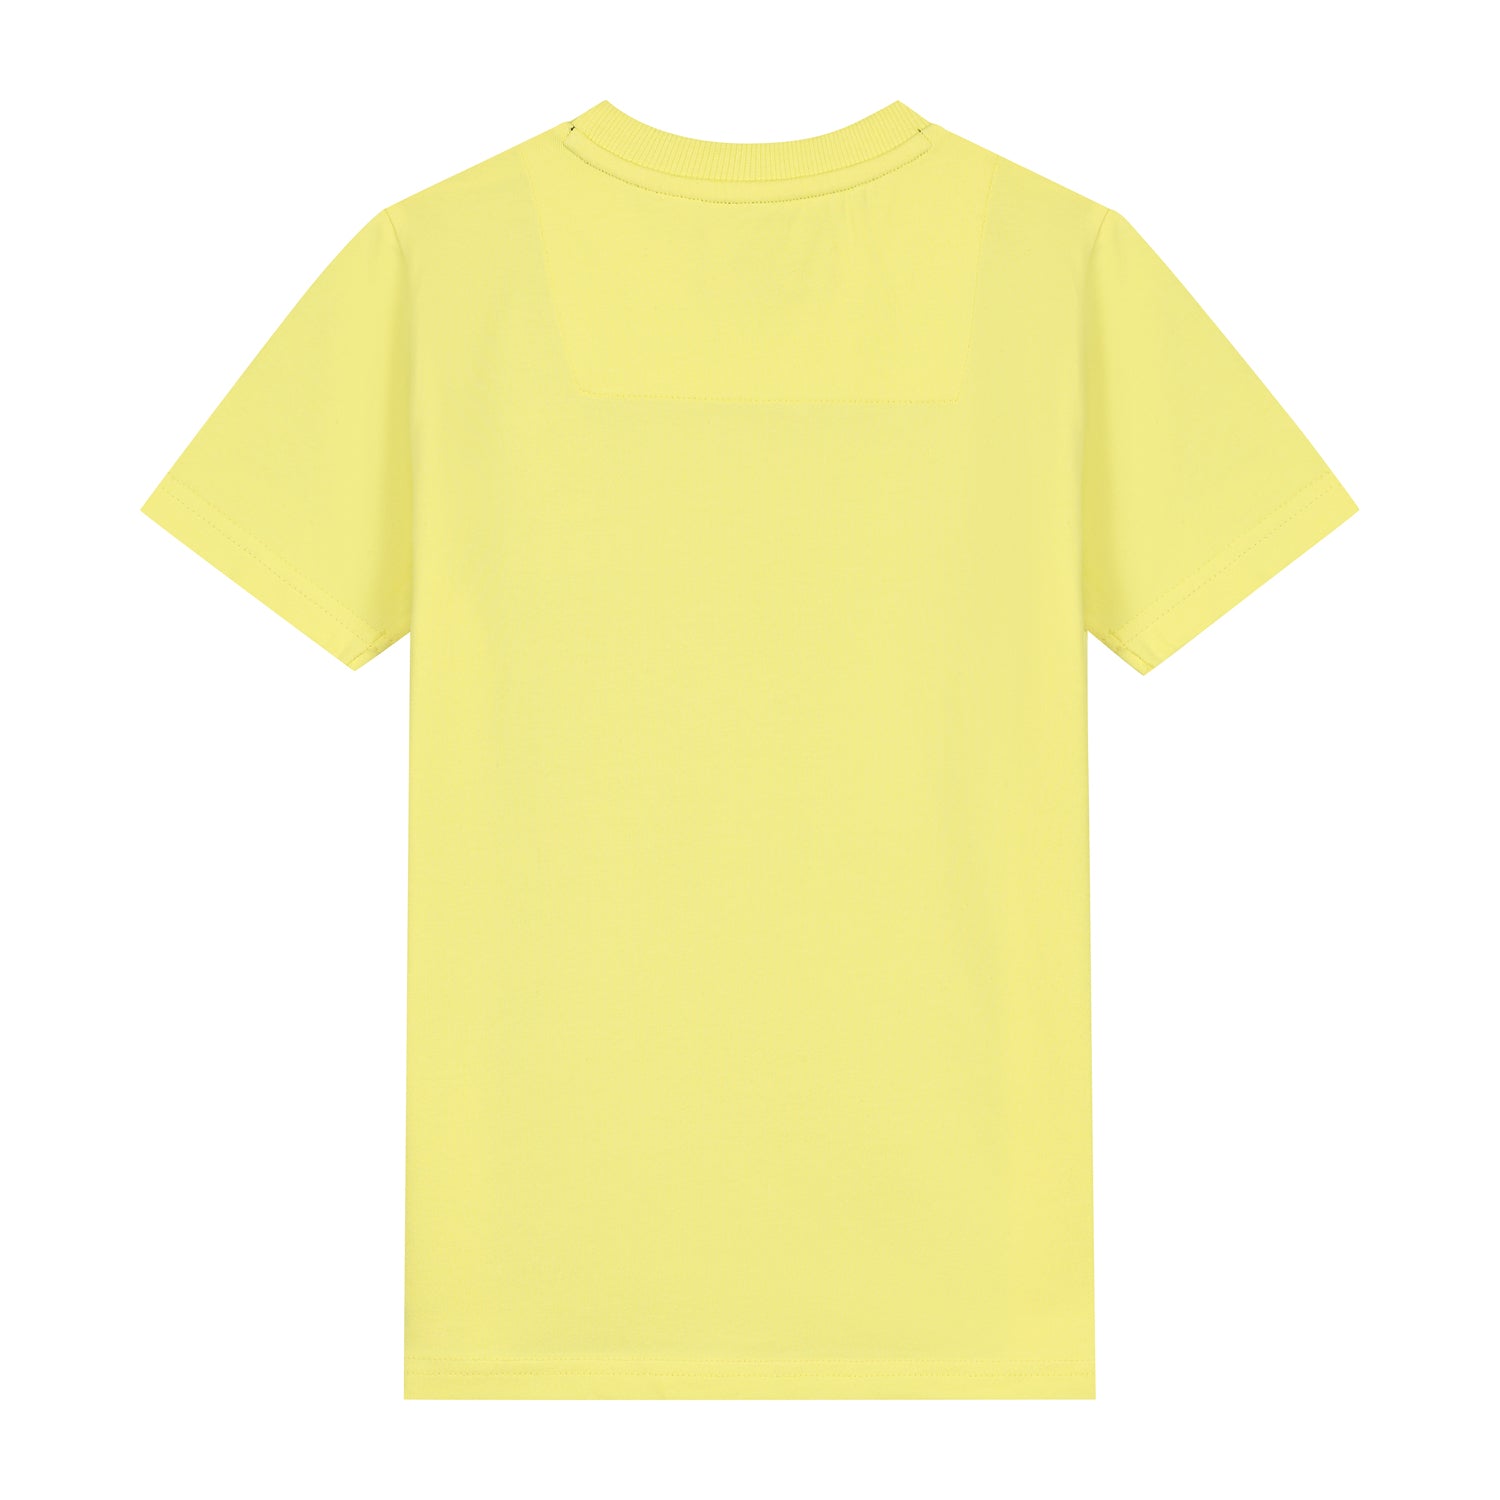 Skurk T-shirt Tasic Lemon